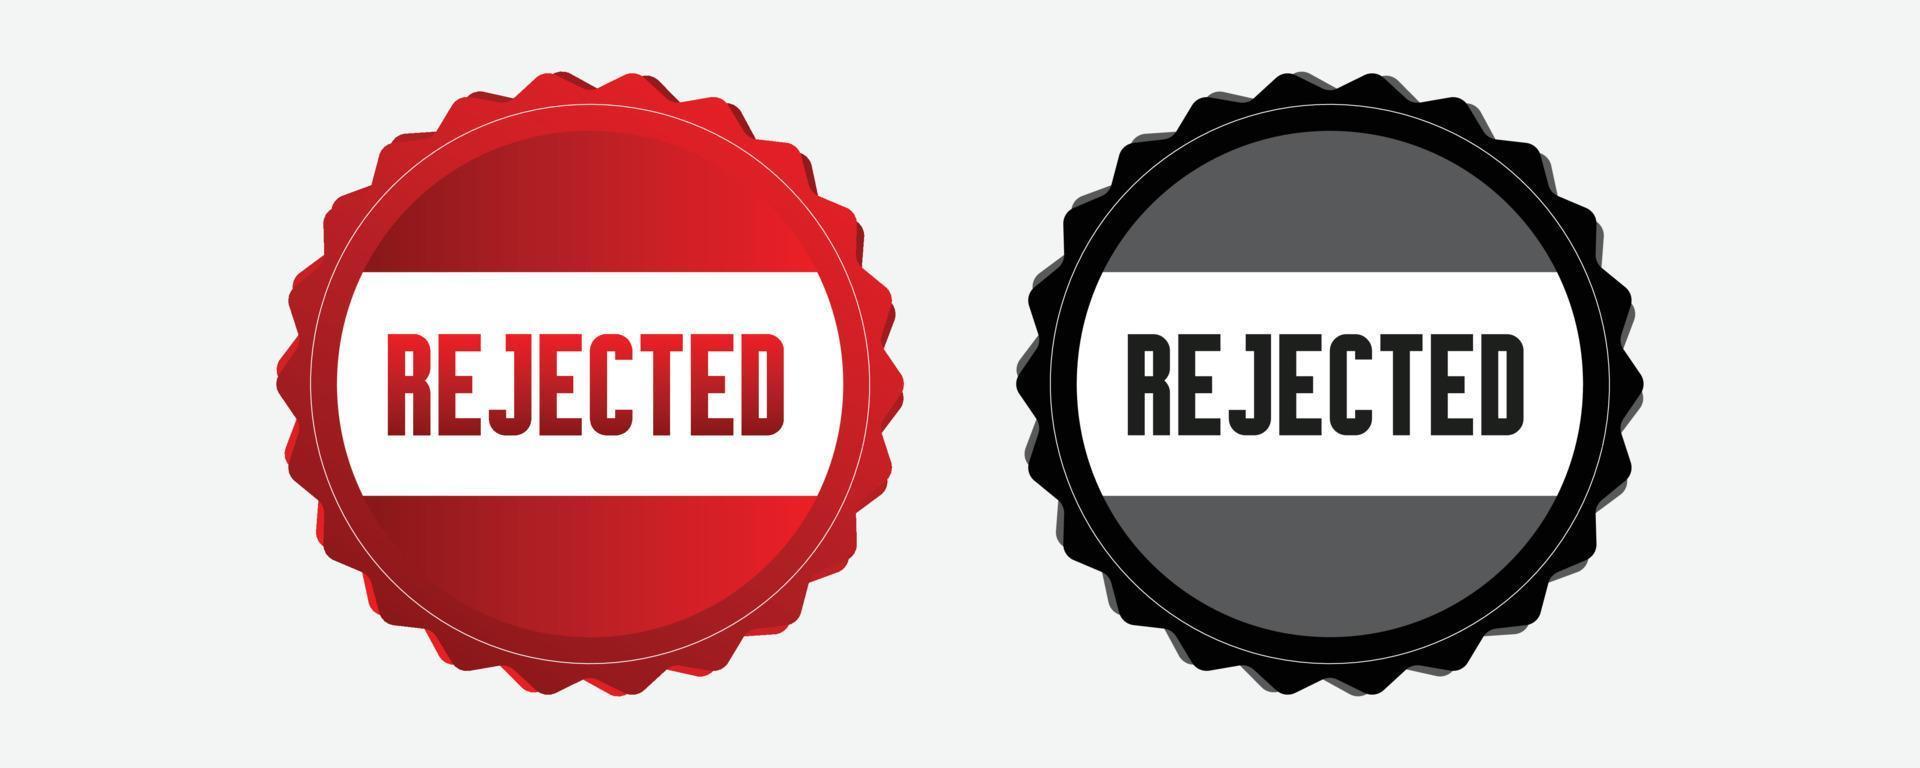 afgekeurd rood plein grunge postzegel Aan wit achtergrond, afgekeurd rubber stempel. afgekeurd rubber grunge postzegel zegel vector illustratie - vector